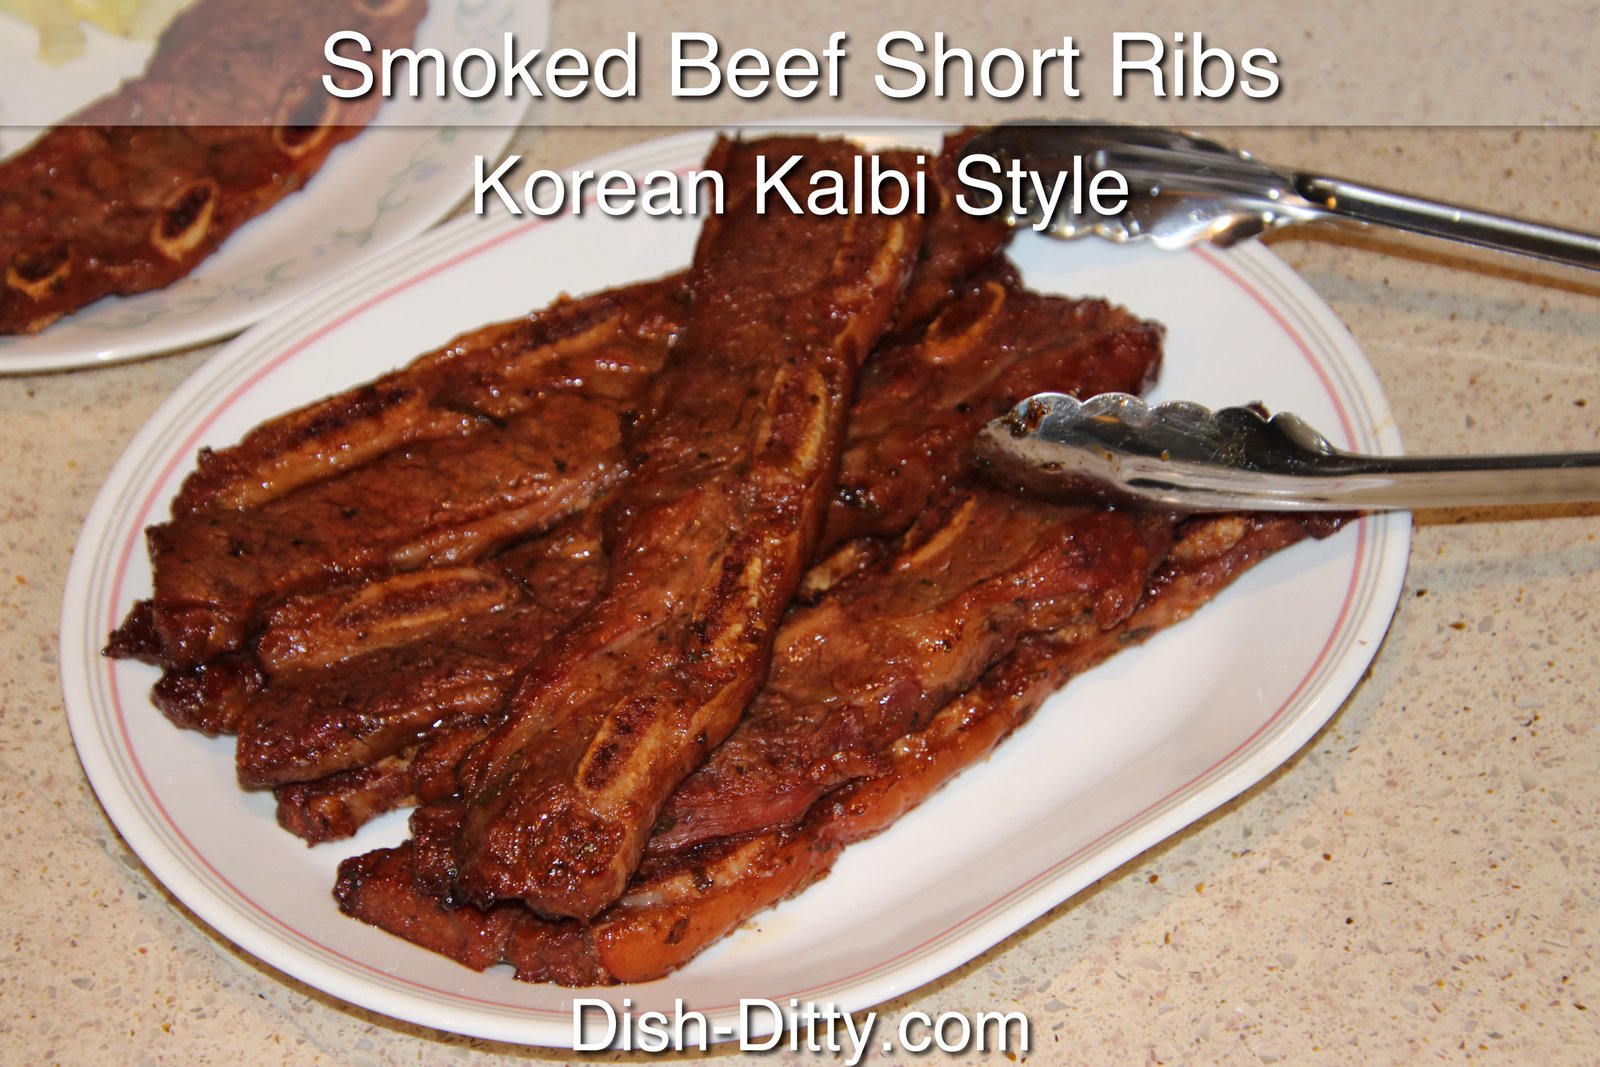 Smoked Beef Short Ribs Recipe (Korean Kalbi Style)